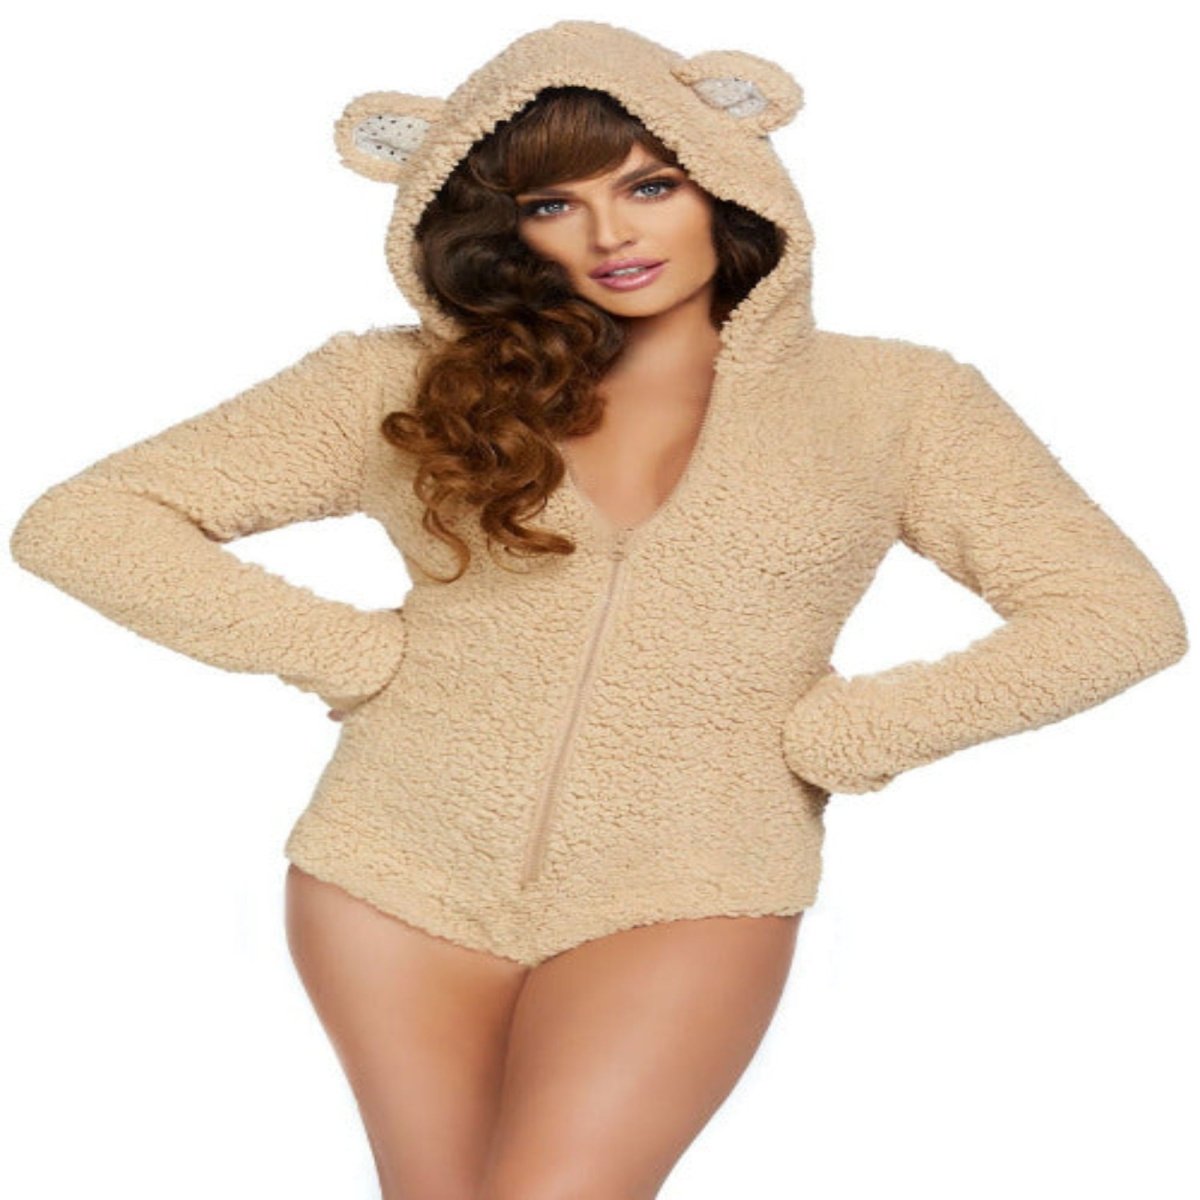 Teddy Bear Costume - worldclasscostumes